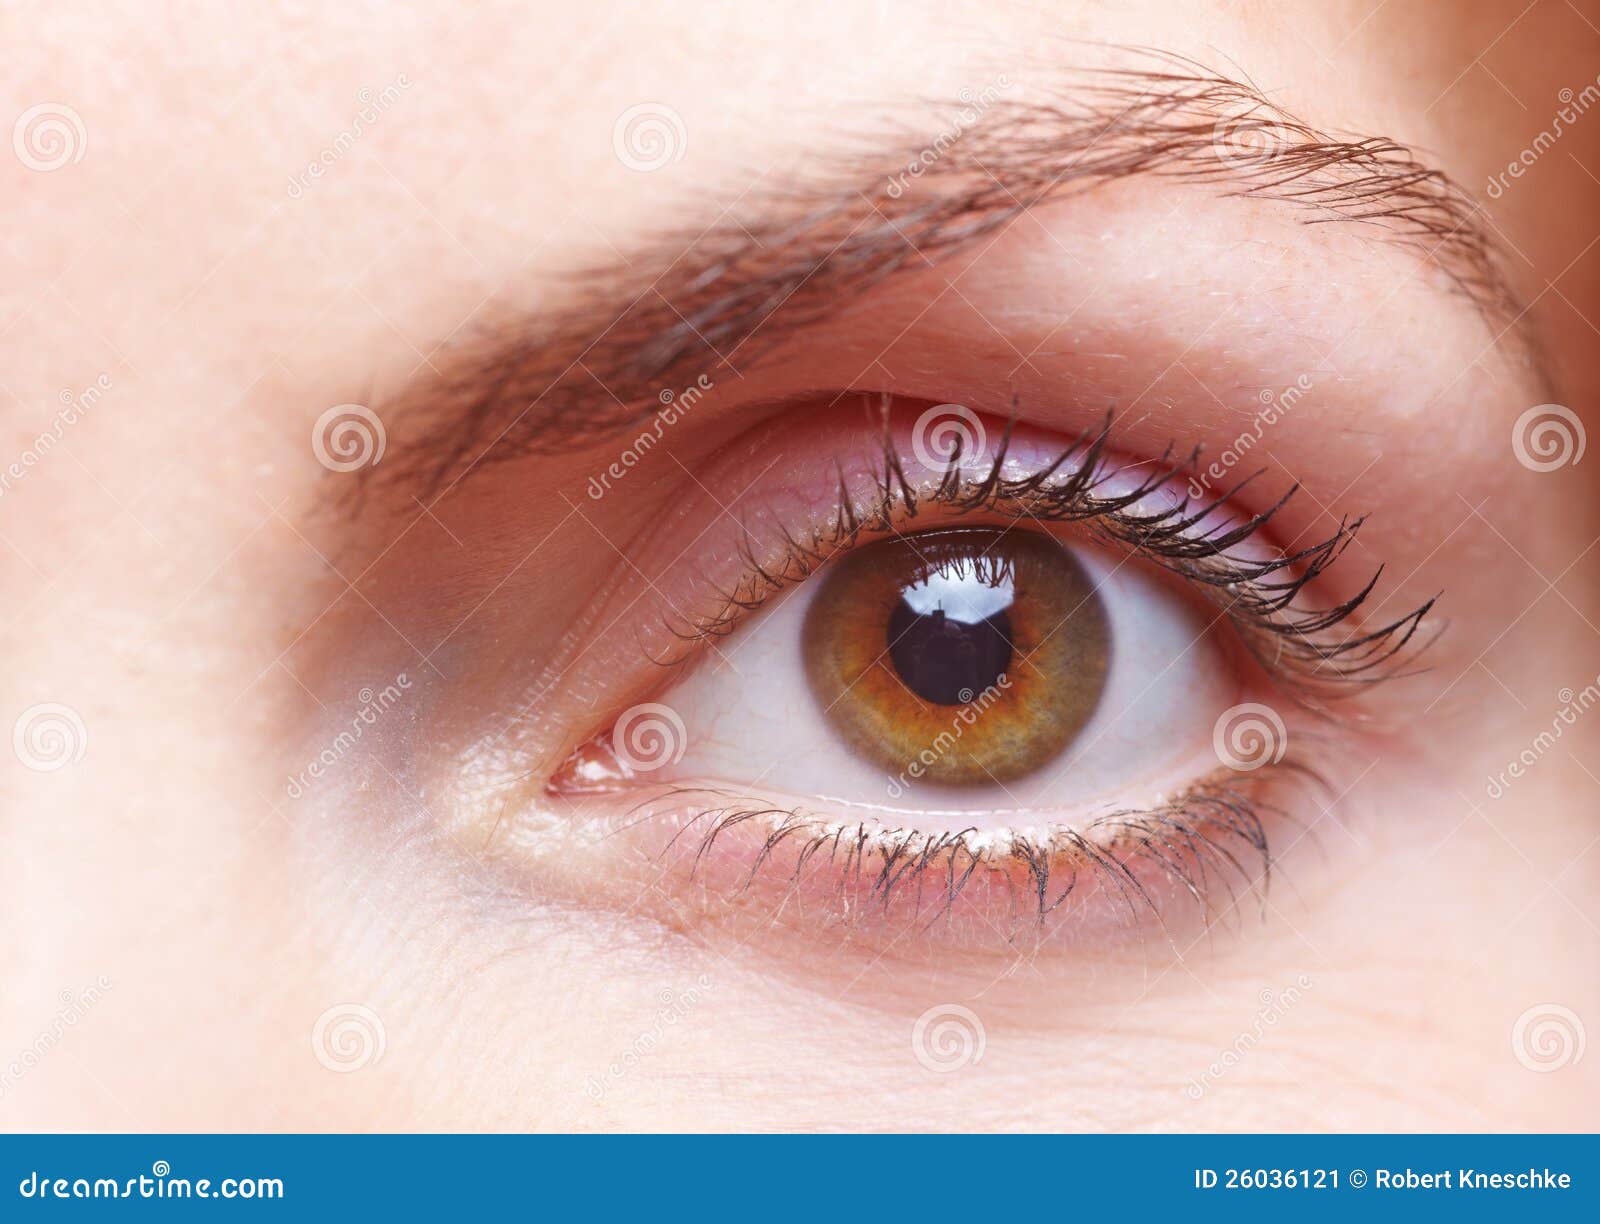  Female  eye  stock image Image of open head cornea woman 